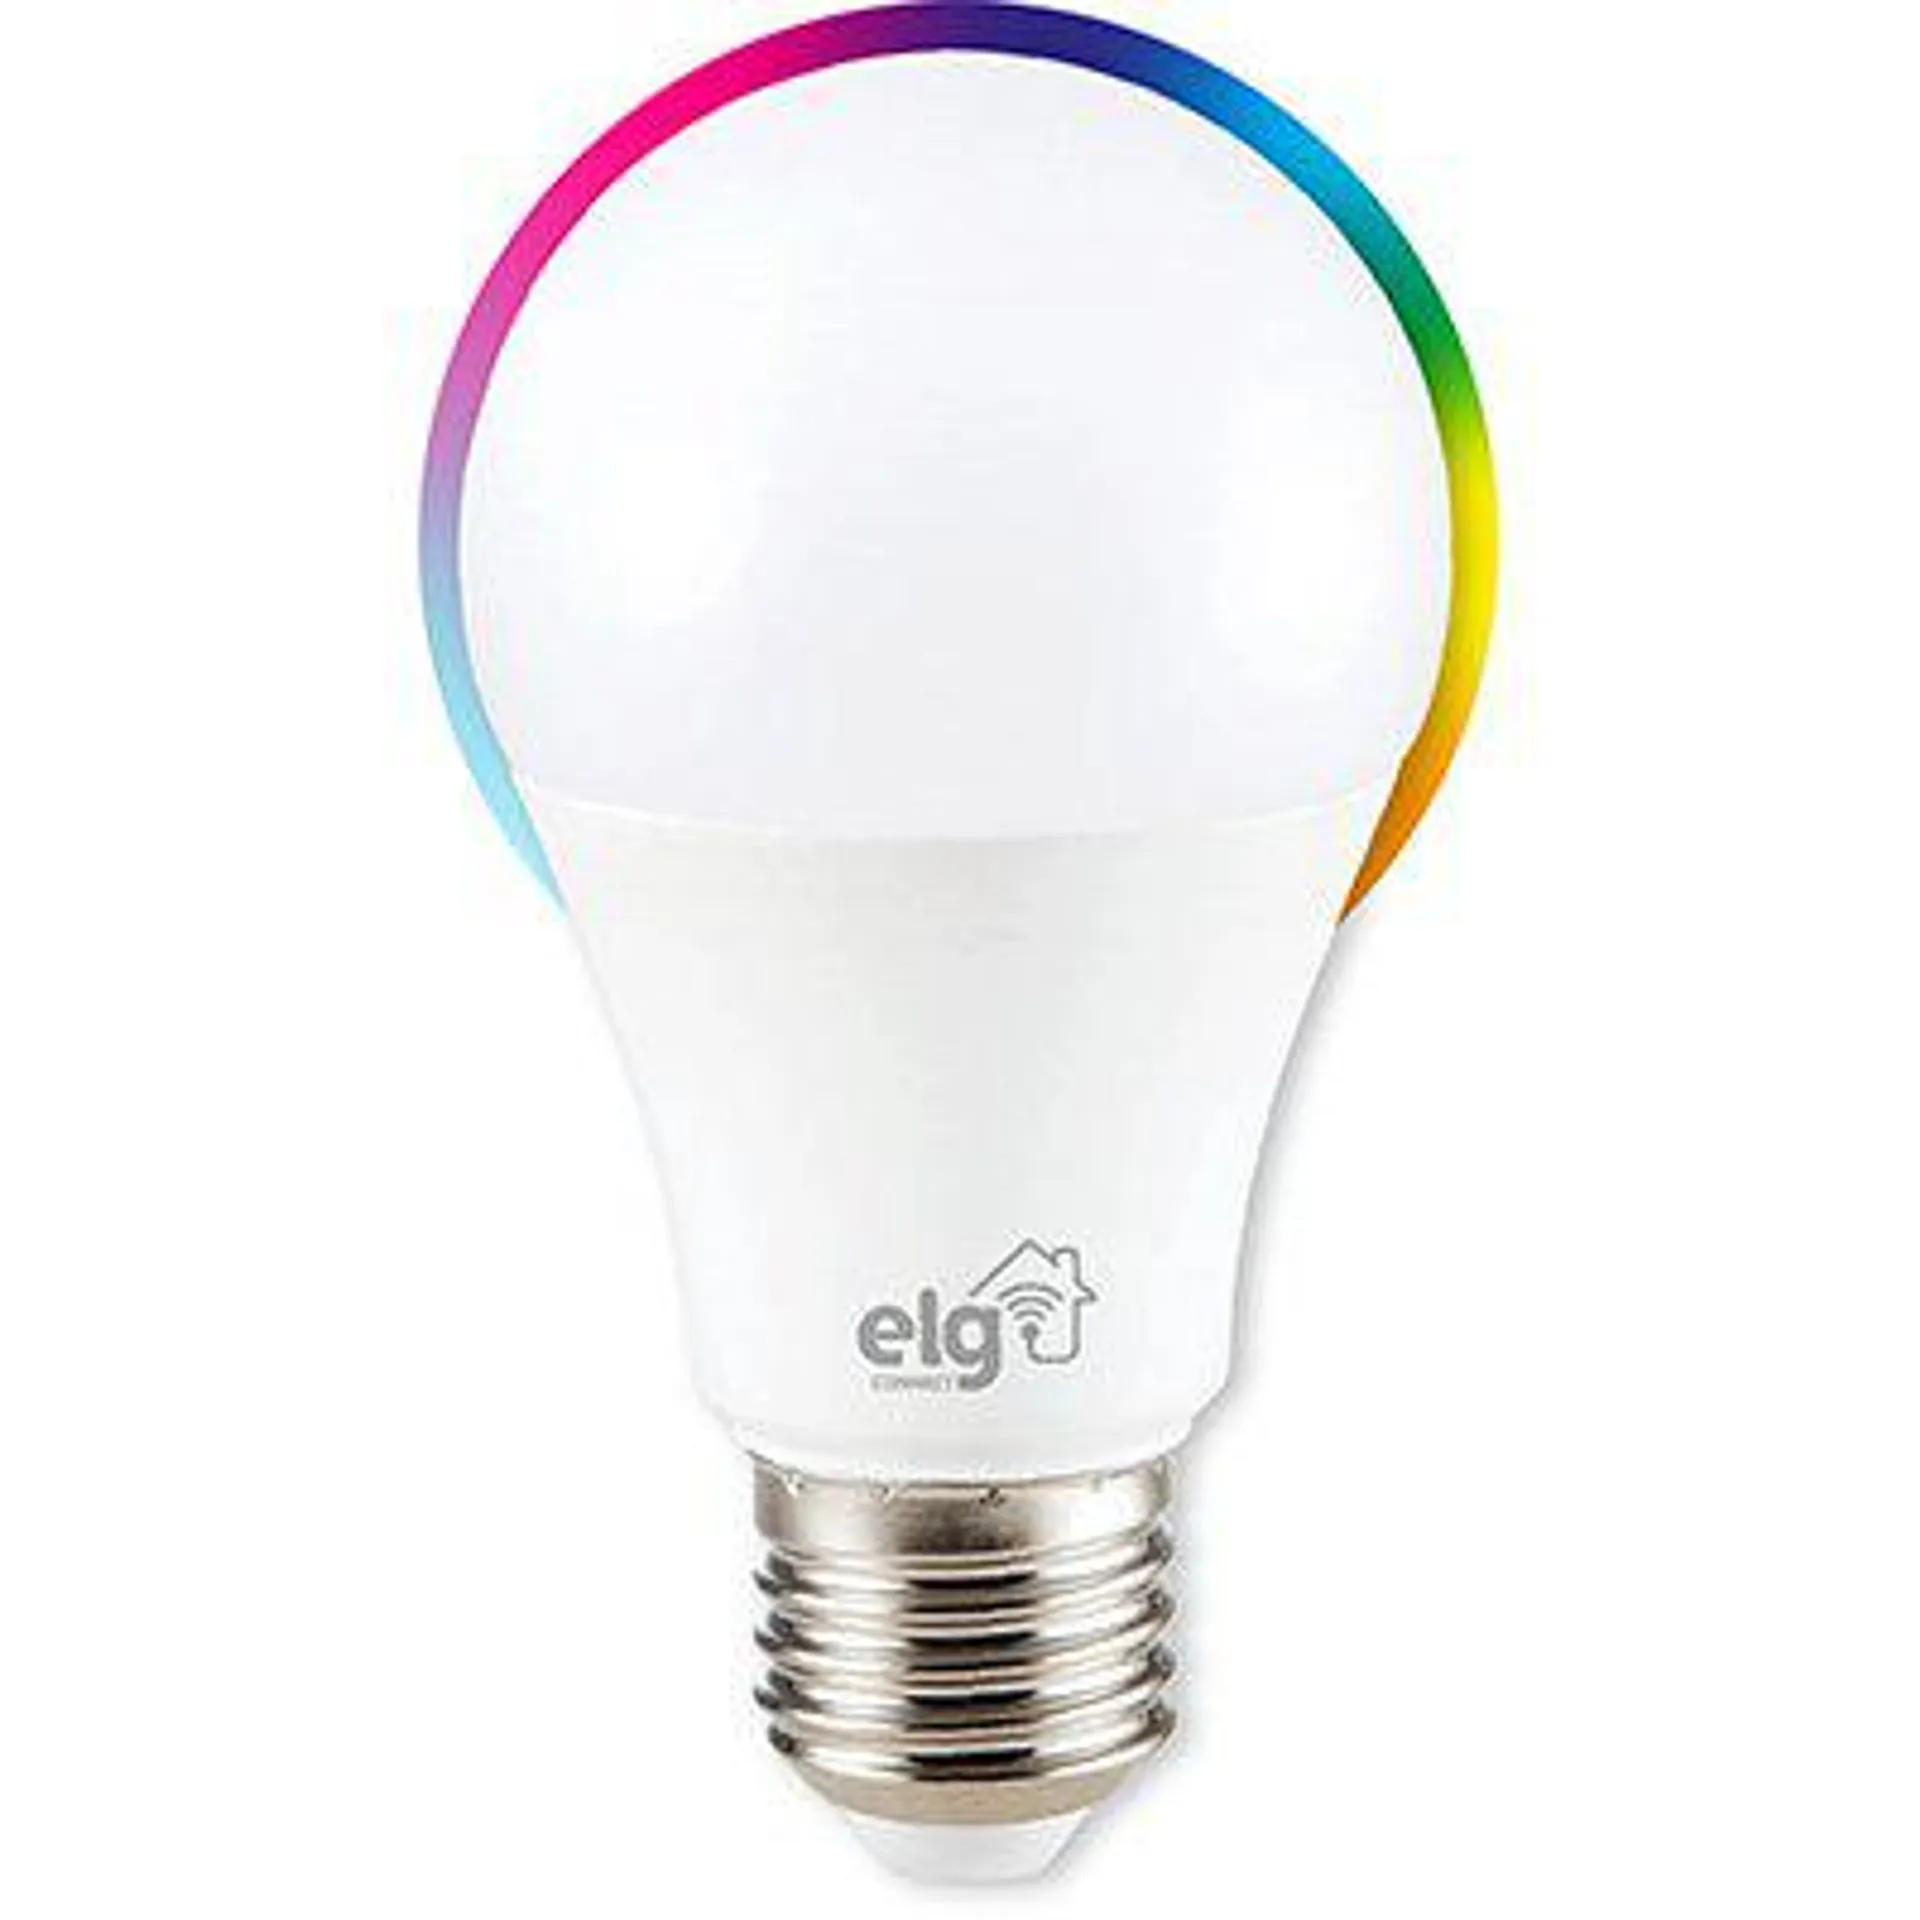 Lâmpada Smart 10w dimerizável, RGB, SHLL100, Elg - CX 1 UN